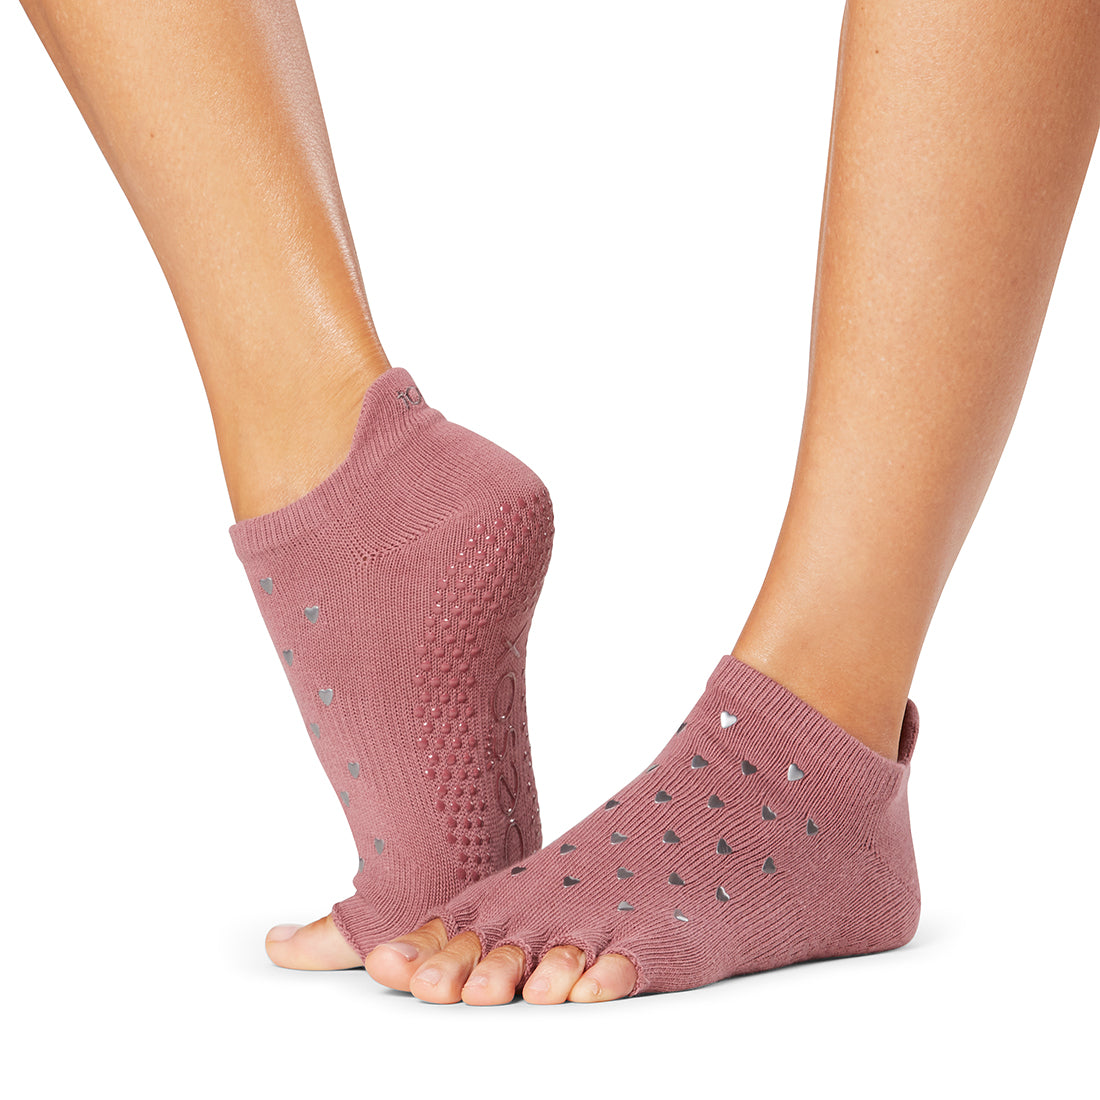 Low Rise Half Toe Grip Socks - Tough Love (Barre / Pilates)